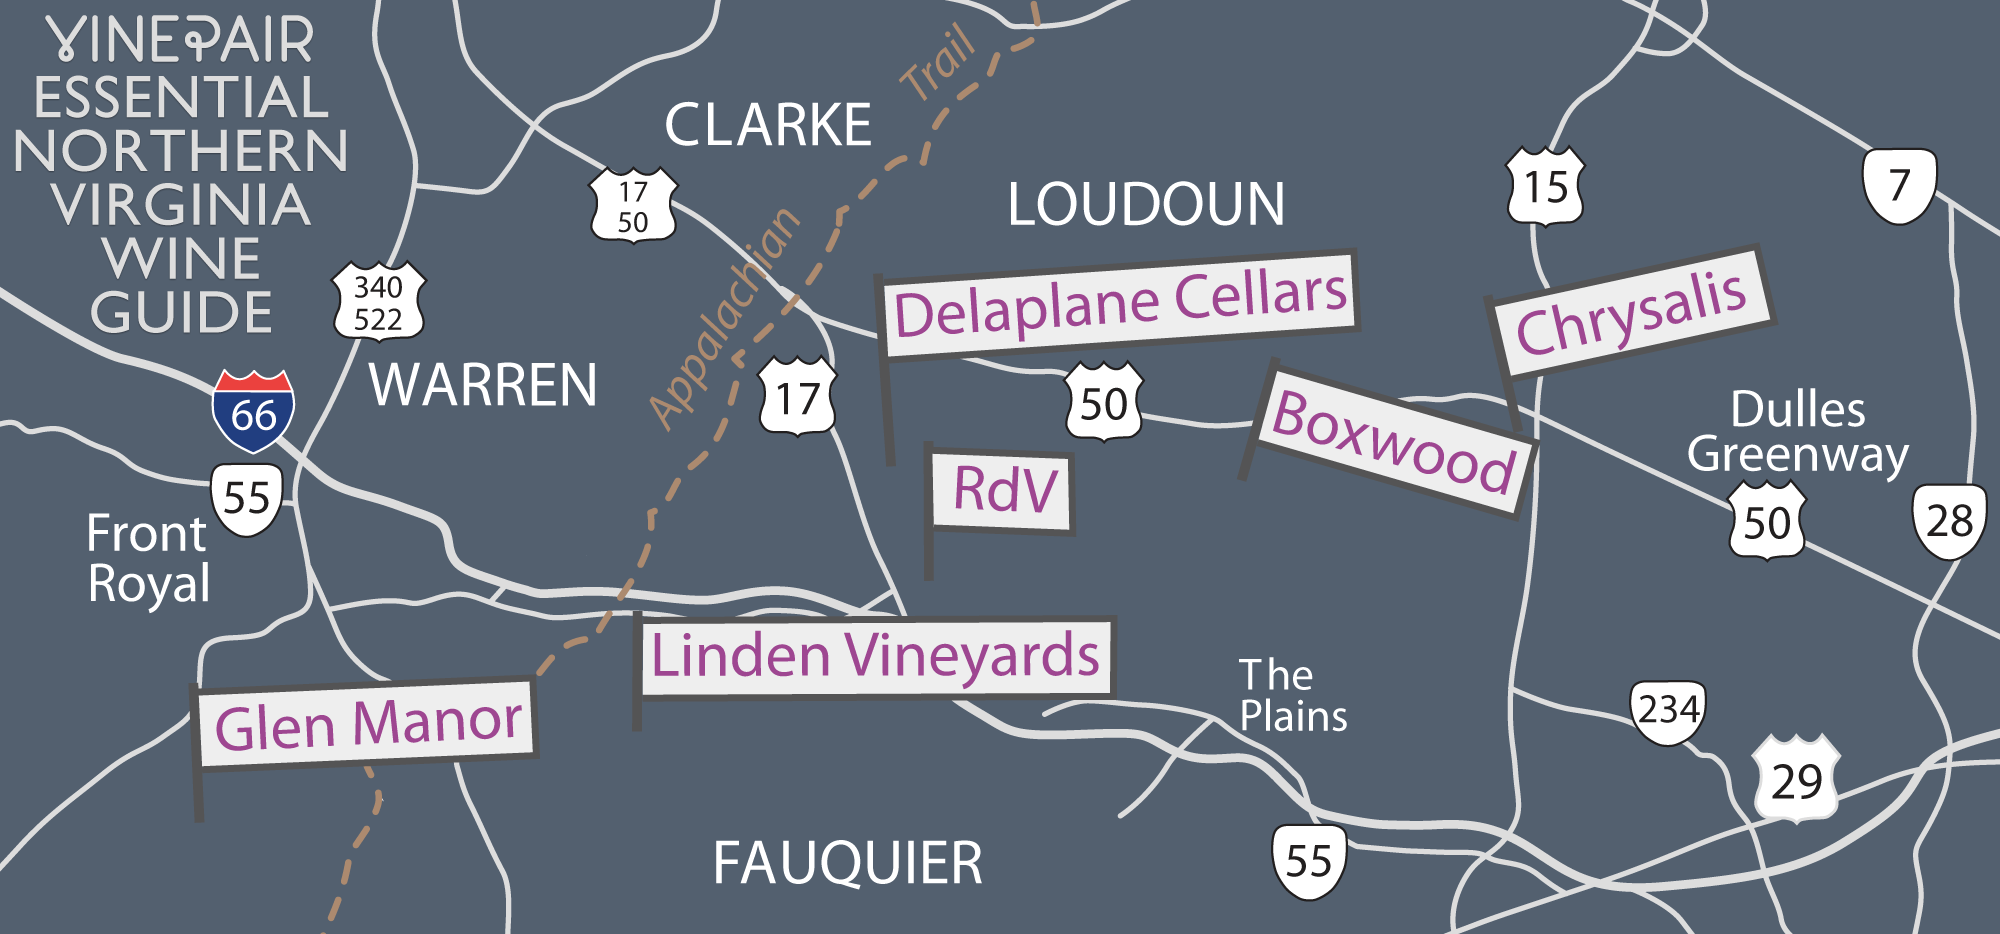 Northern Virginia Wineries Map